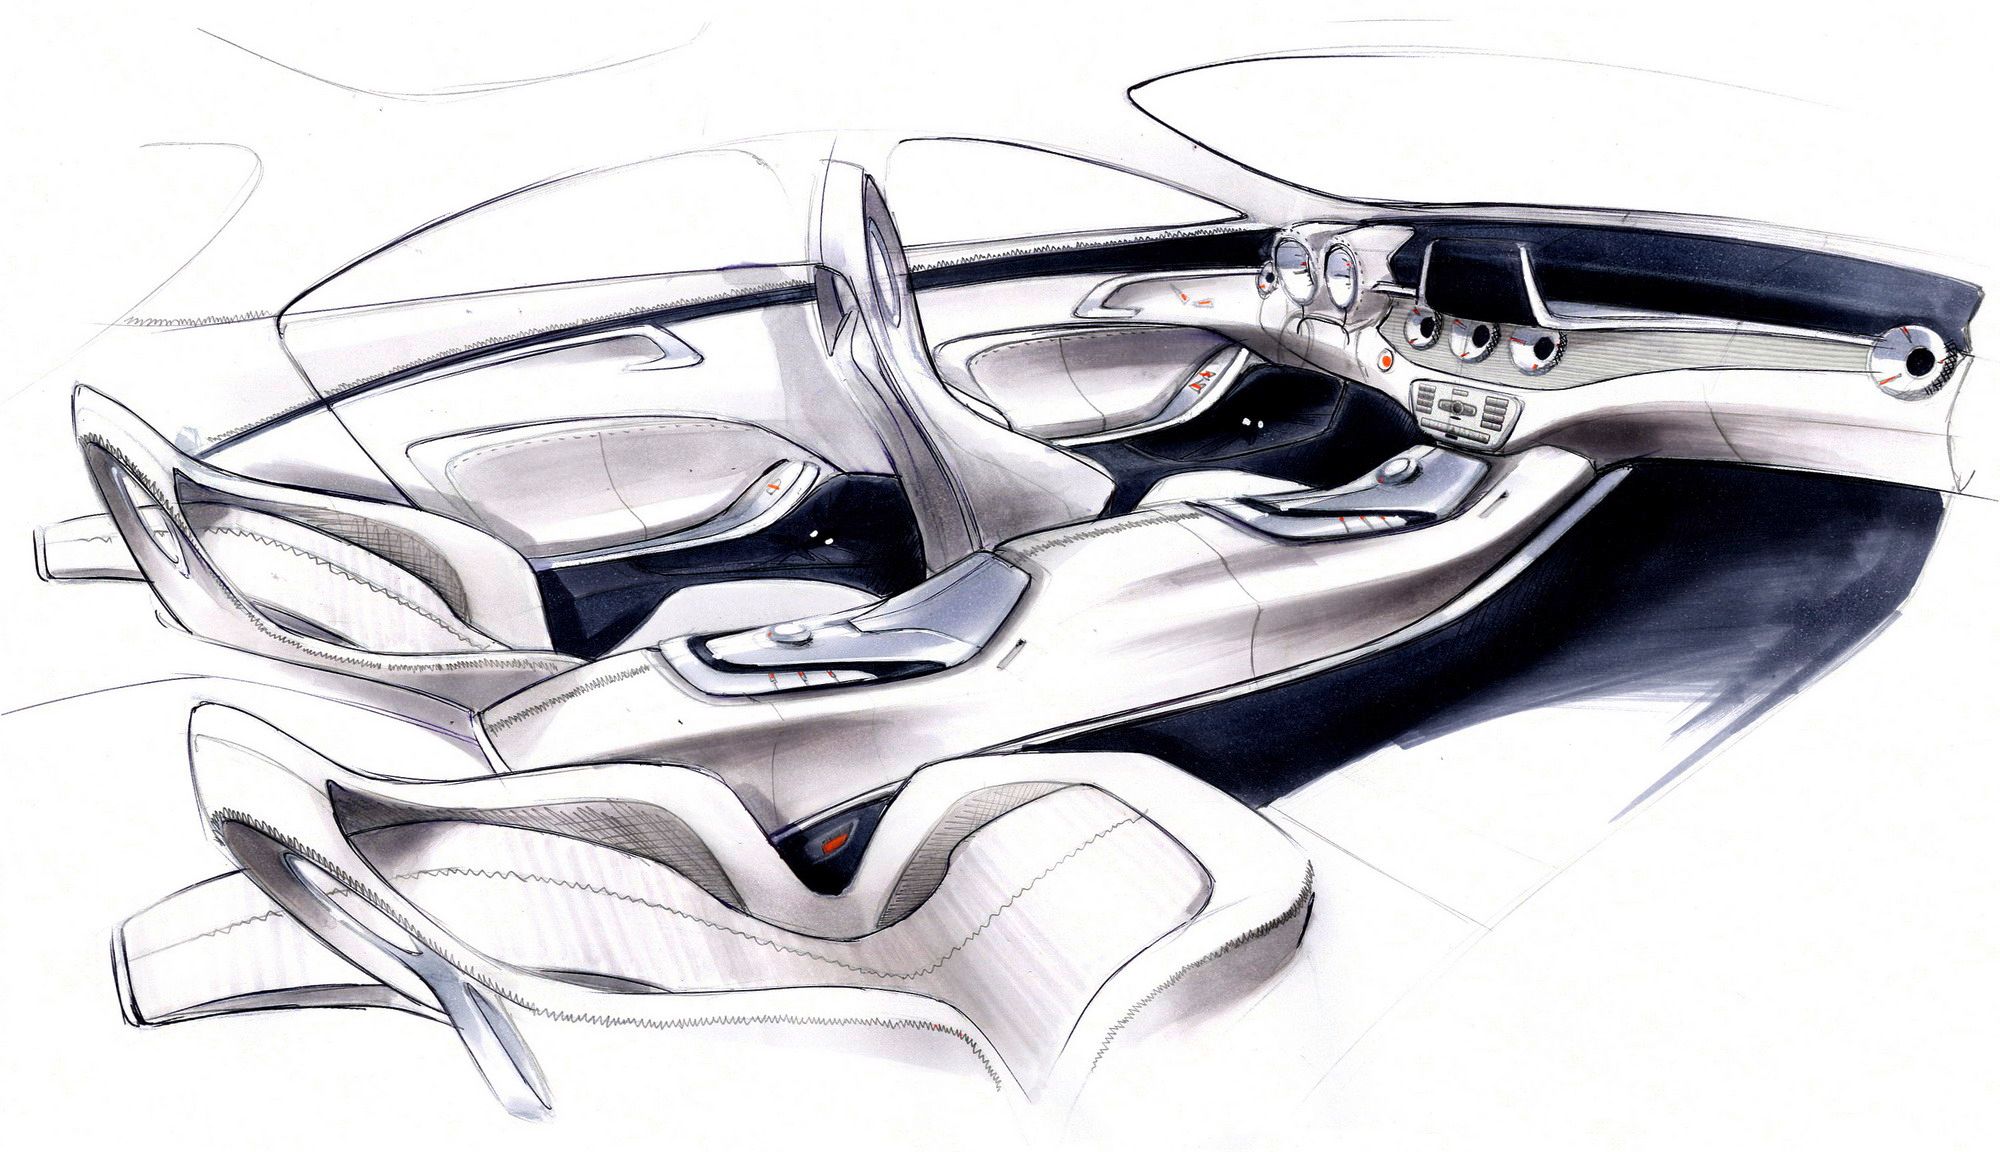 2012 Mercedes-Benz Concept Style Coupe (CLC)